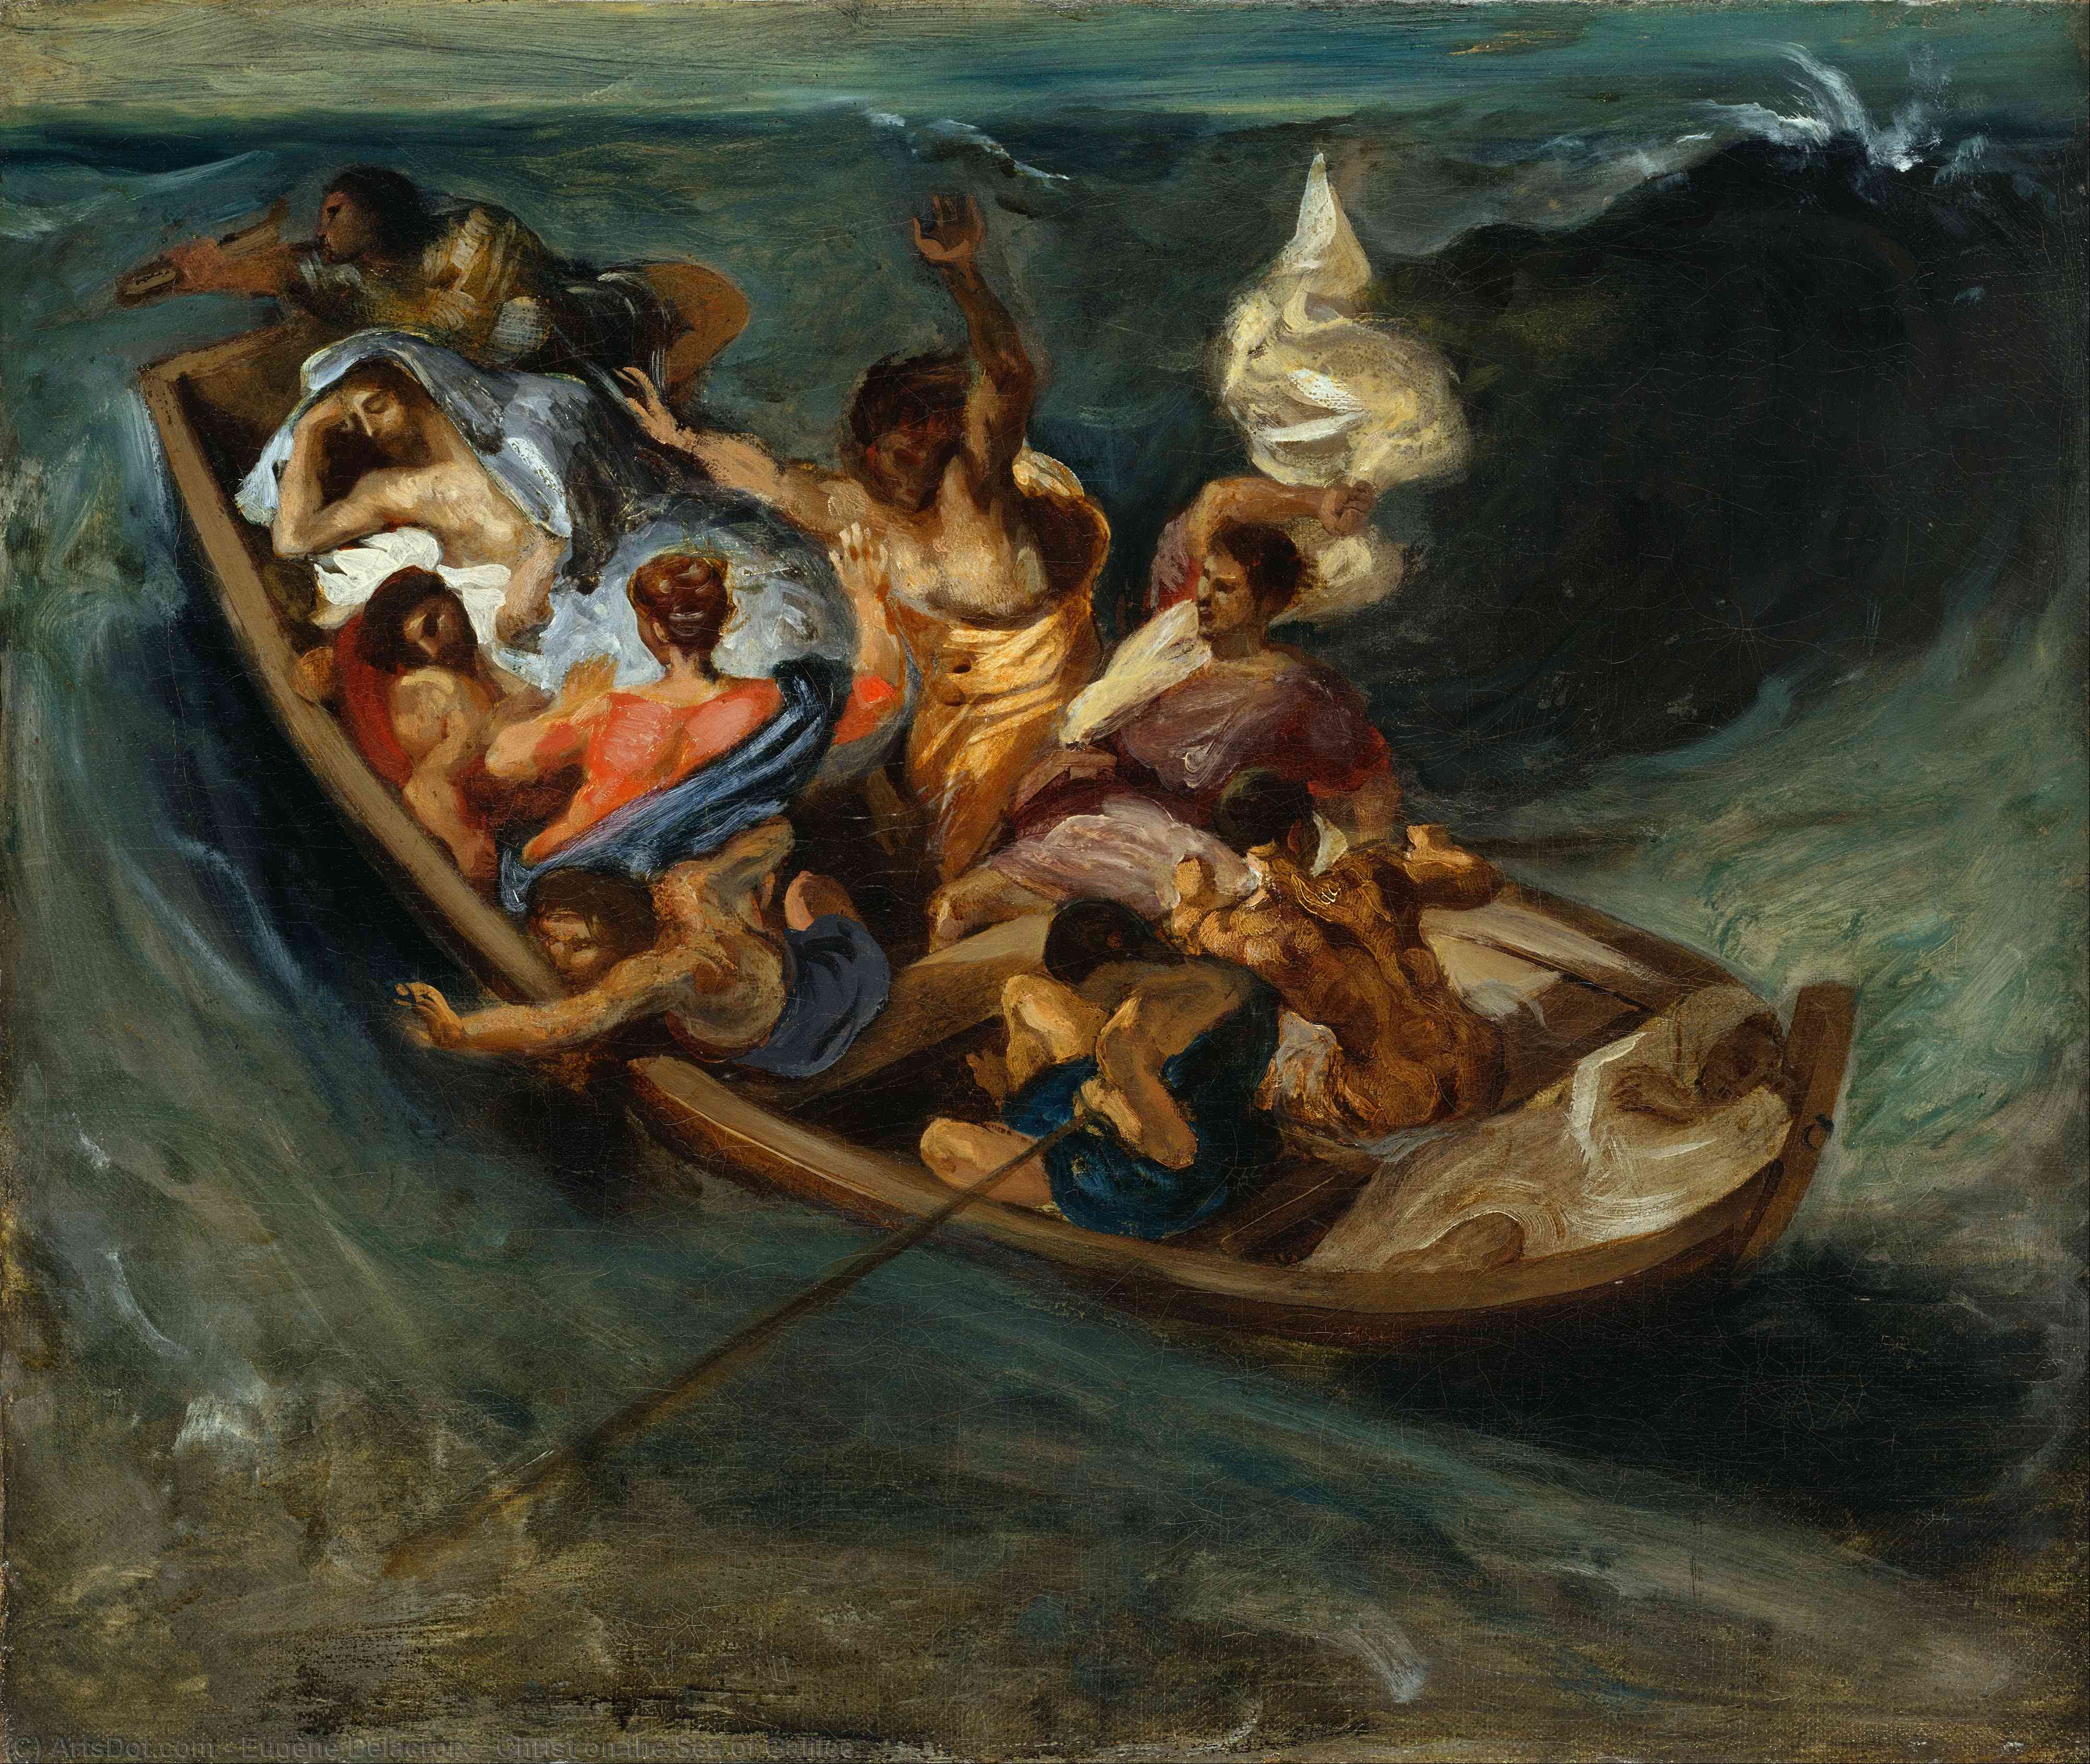 Wikioo.org - สารานุกรมวิจิตรศิลป์ - จิตรกรรม Eugène Delacroix - Christ on the Sea of Galilee